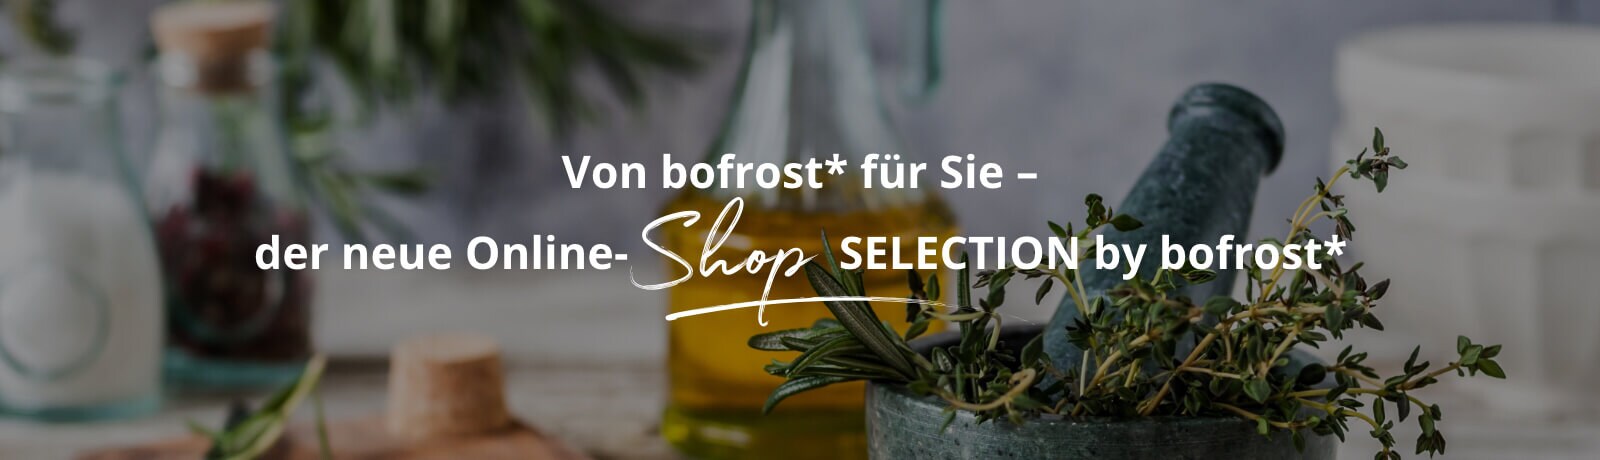 Unser neuet Partnershop Selection by bofrost*